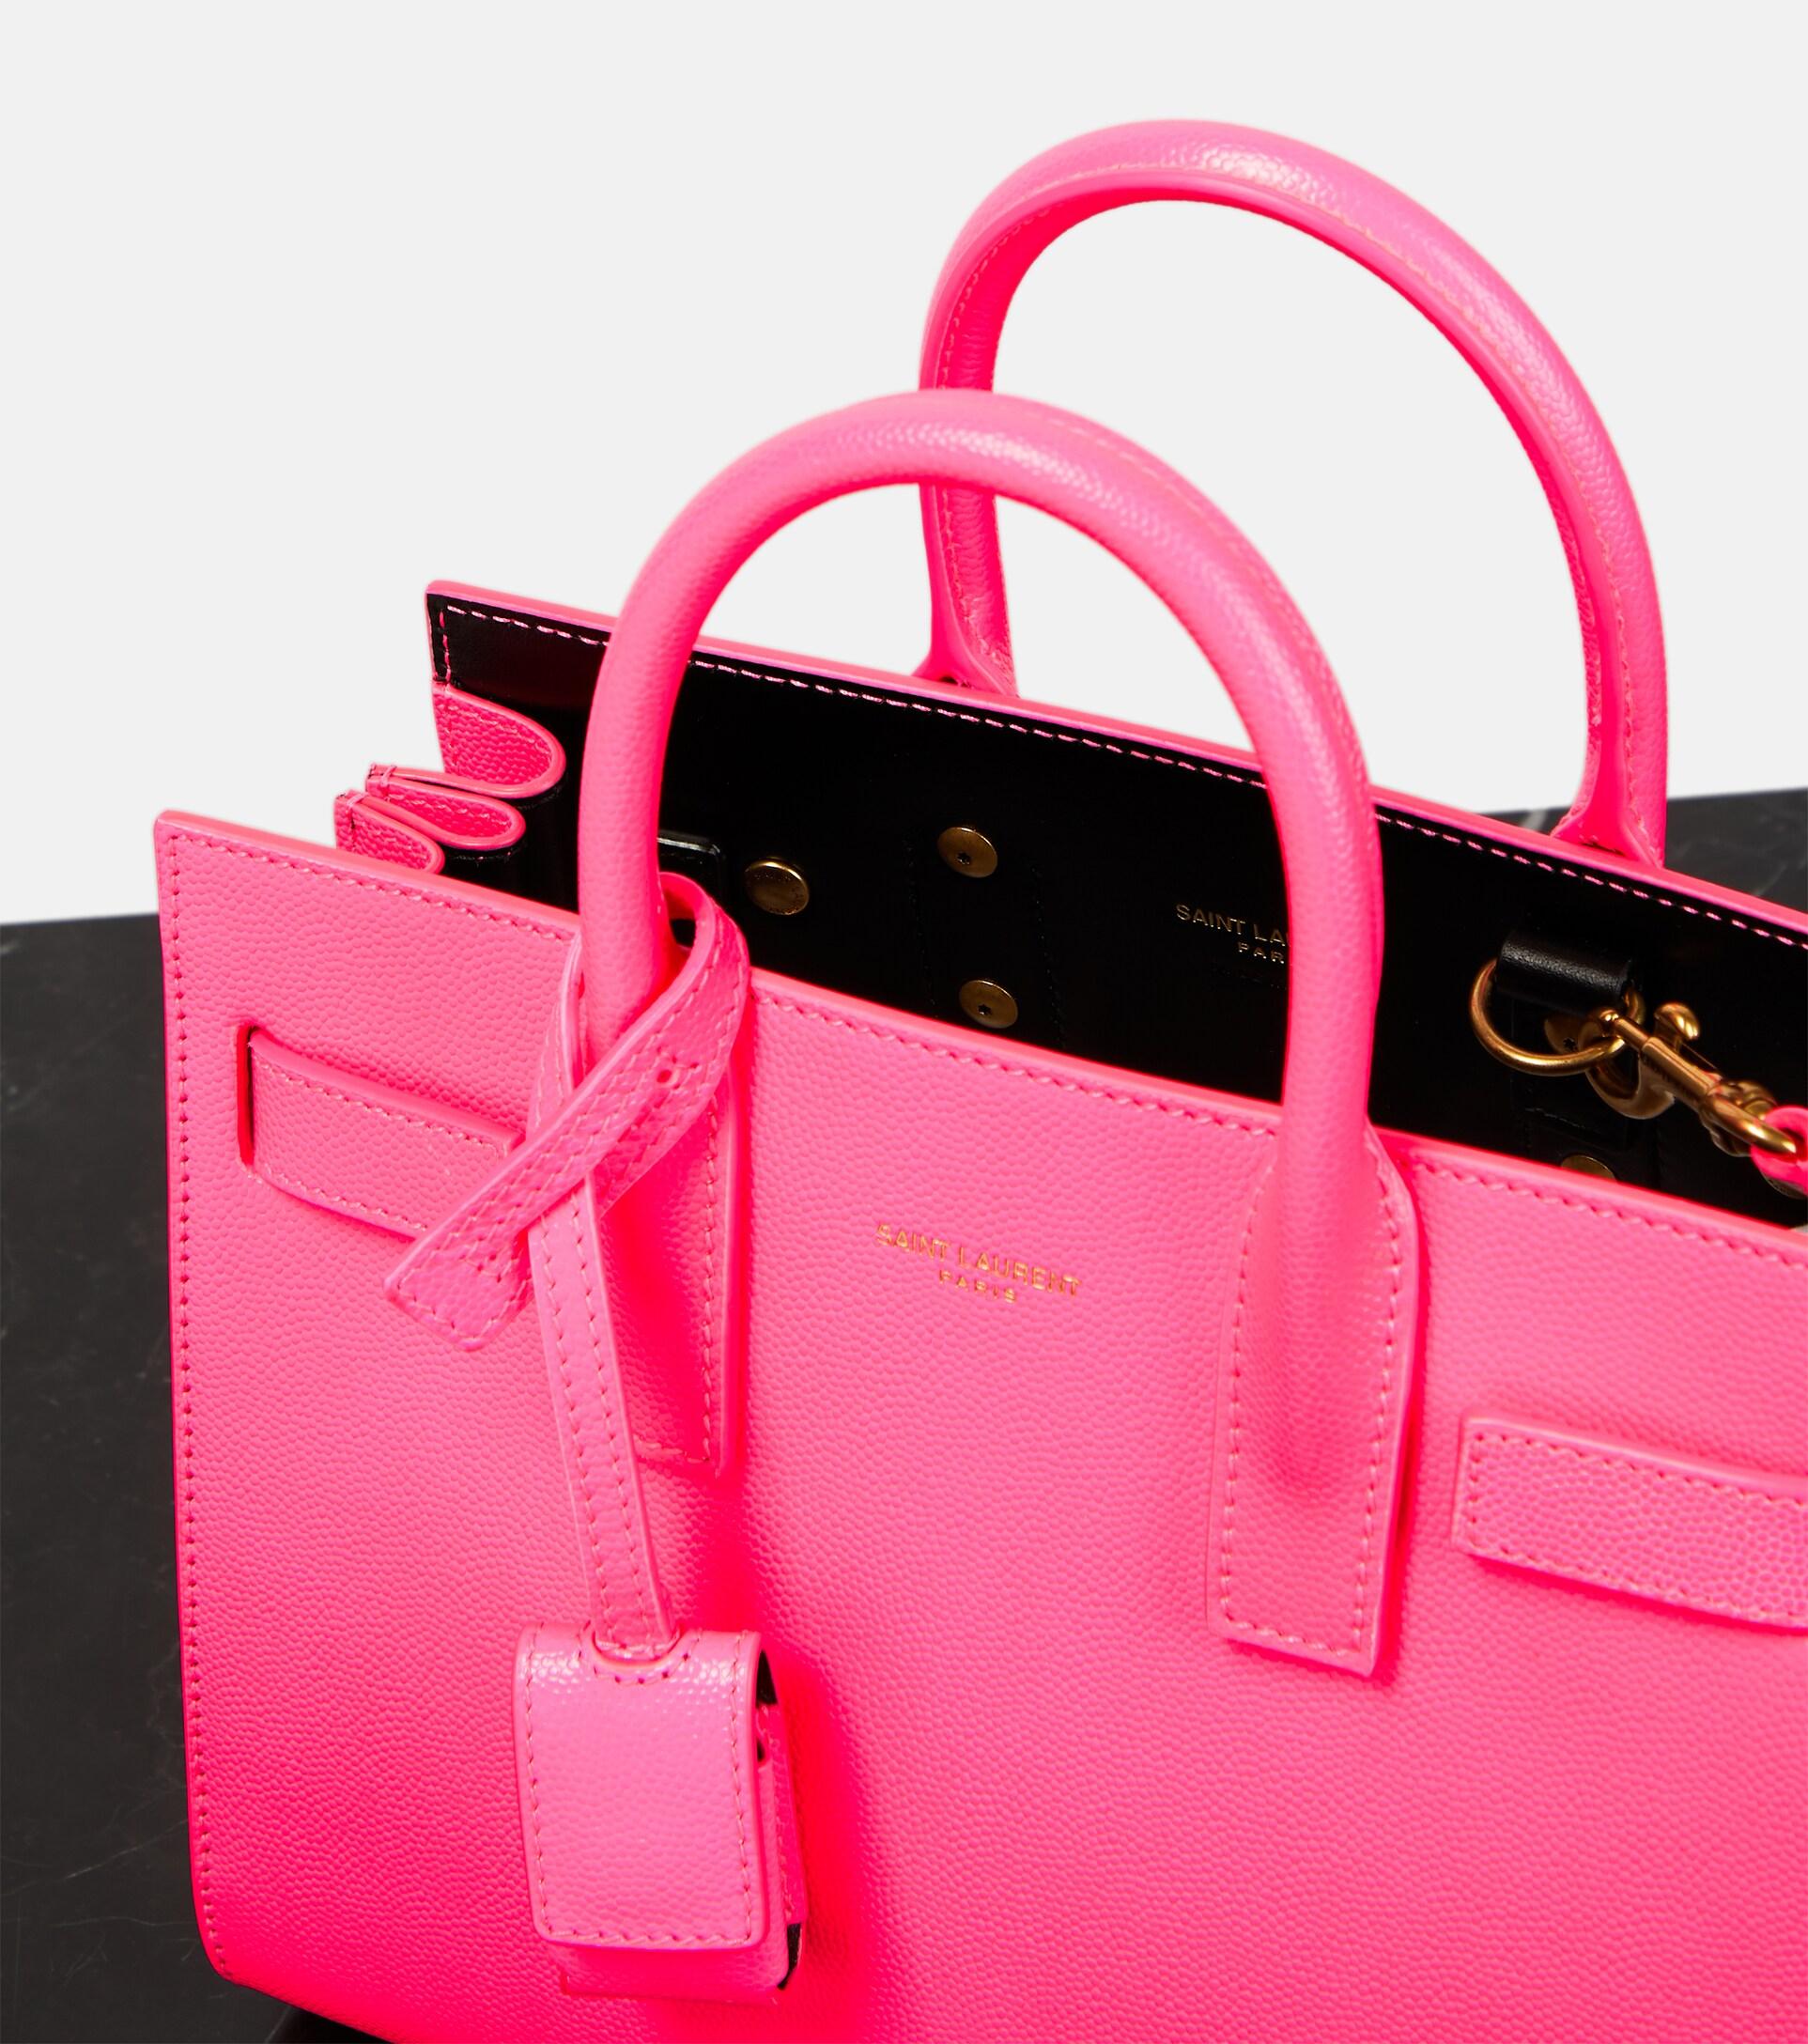 Saint Laurent Sac De Jour Nano Leather Tote Bag in Pink | Lyst